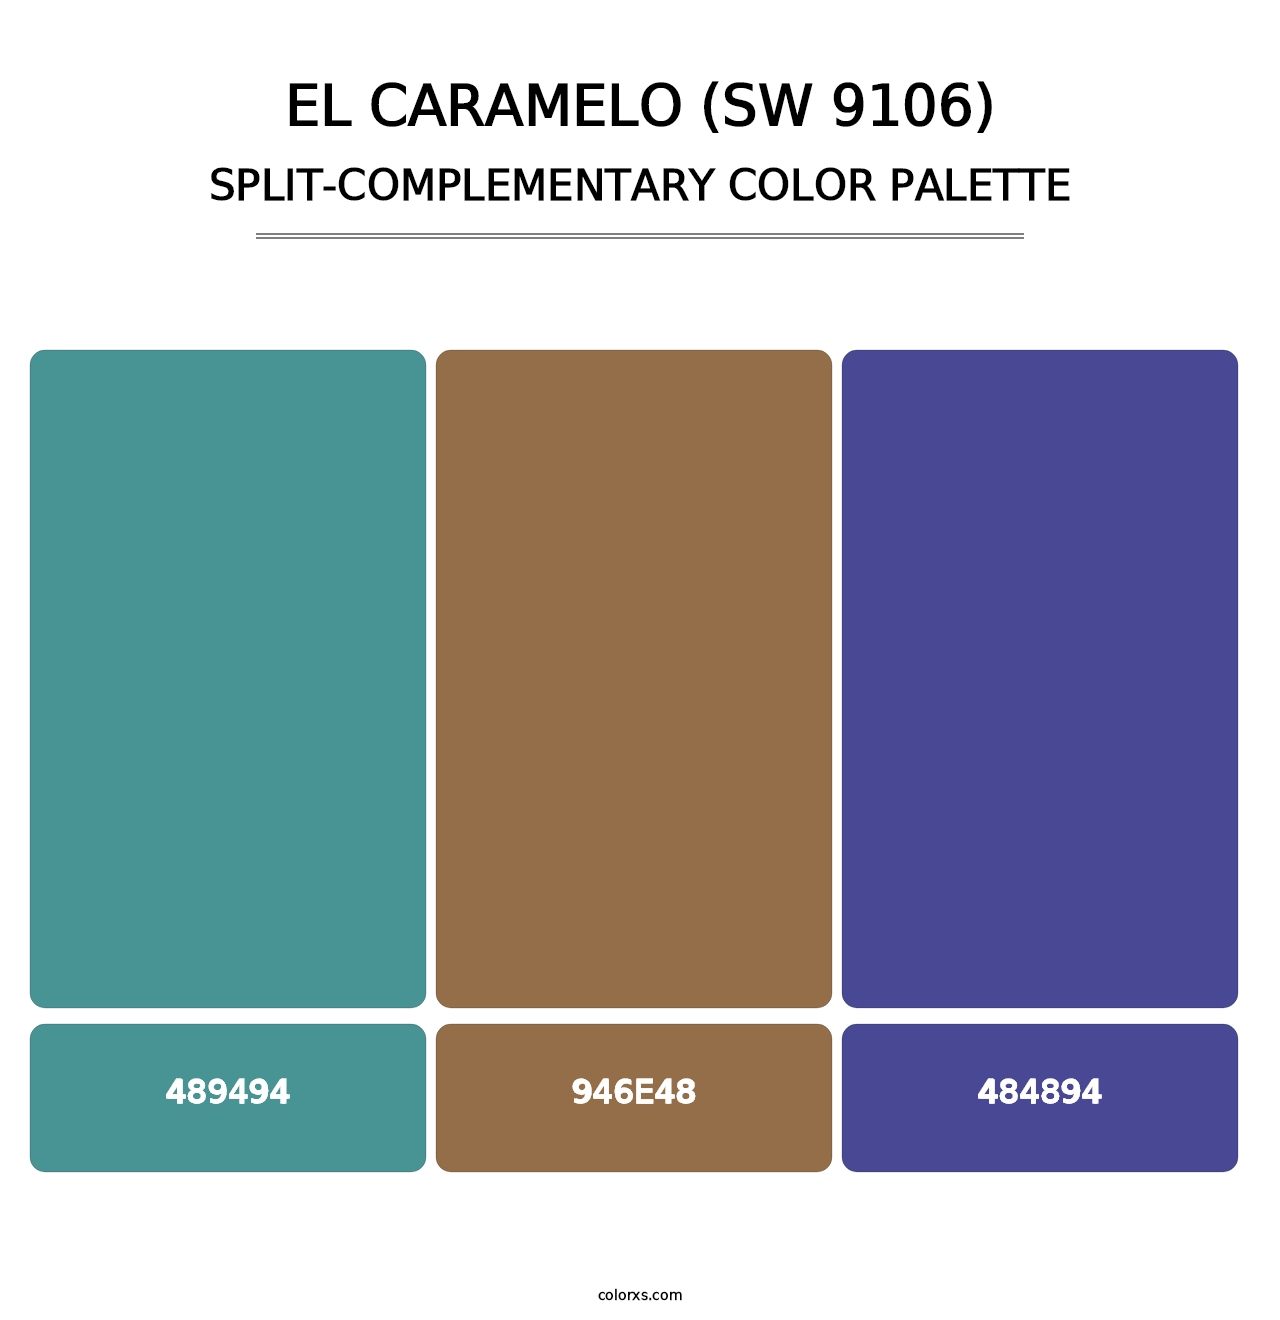 El Caramelo (SW 9106) - Split-Complementary Color Palette